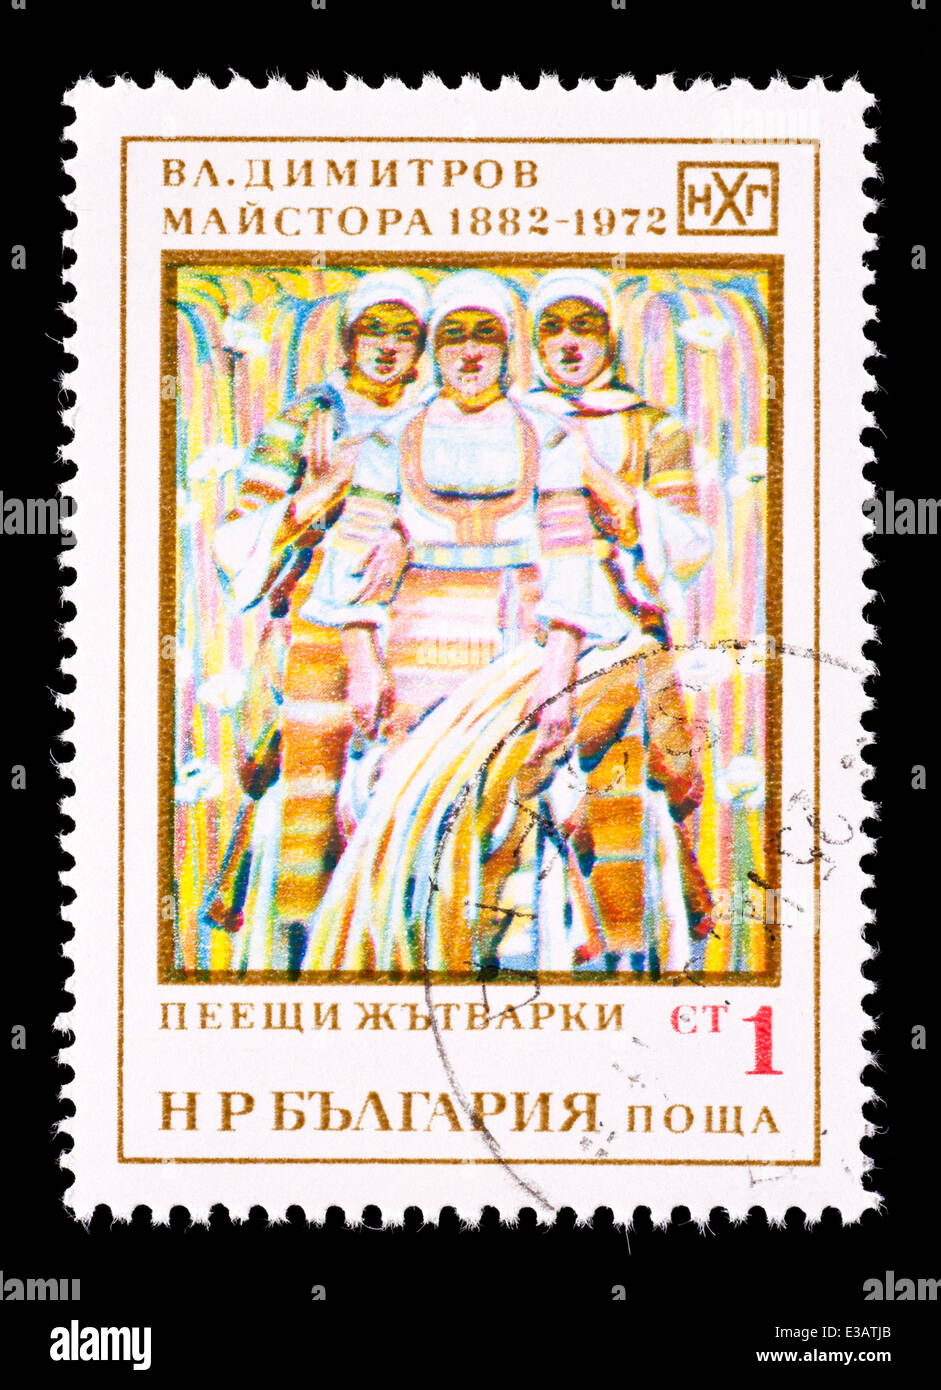 Postage stamp from Bulgaria depicting the Vladimir Dimitrov painting 'Singing Harvesters' Stock Photo